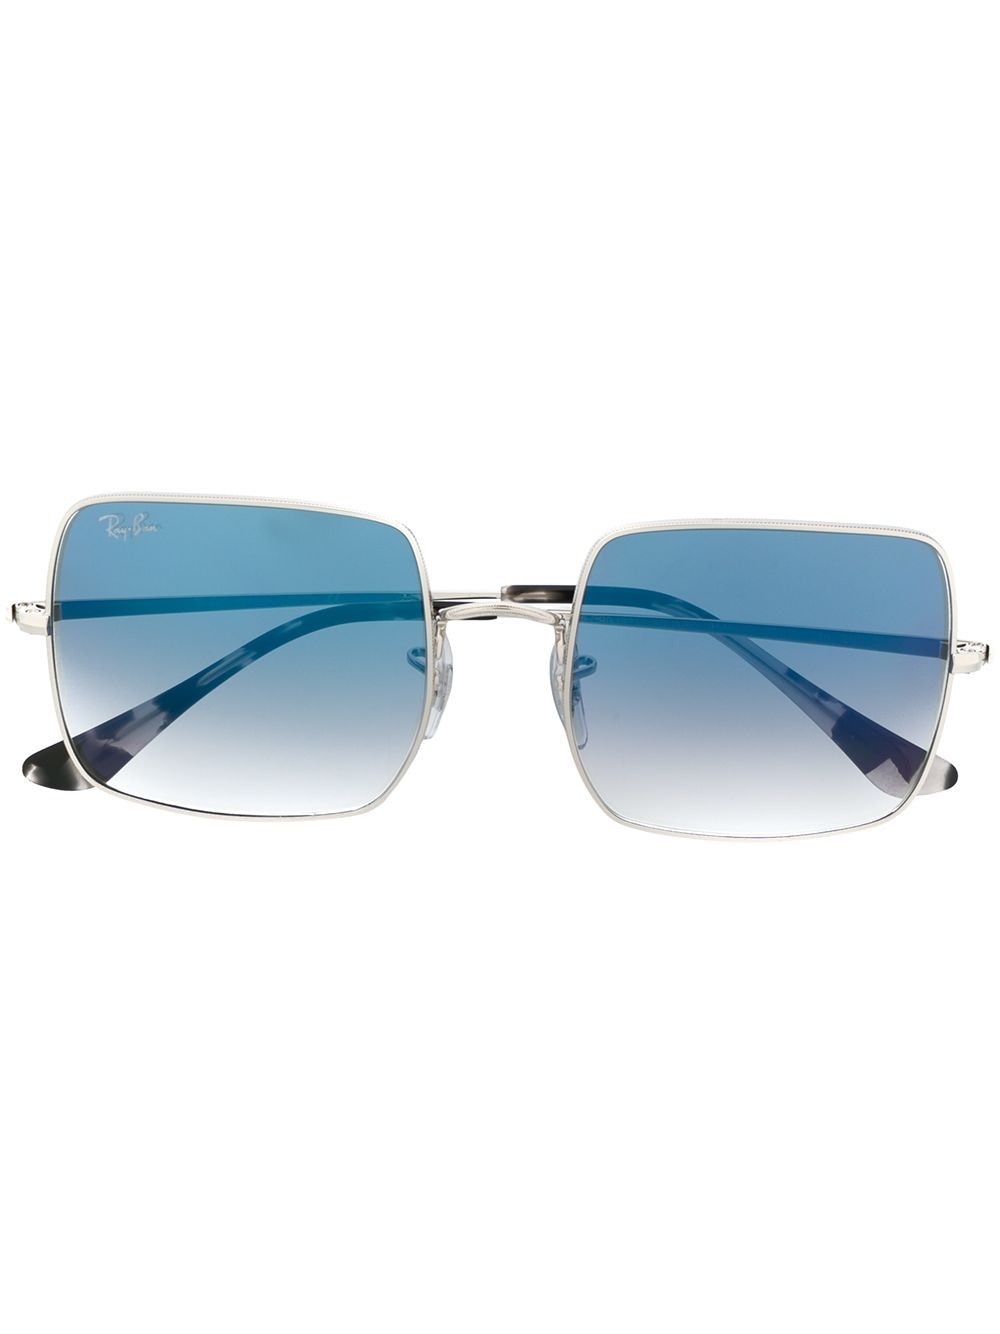 Image 1 of Ray-Ban square sunglasses